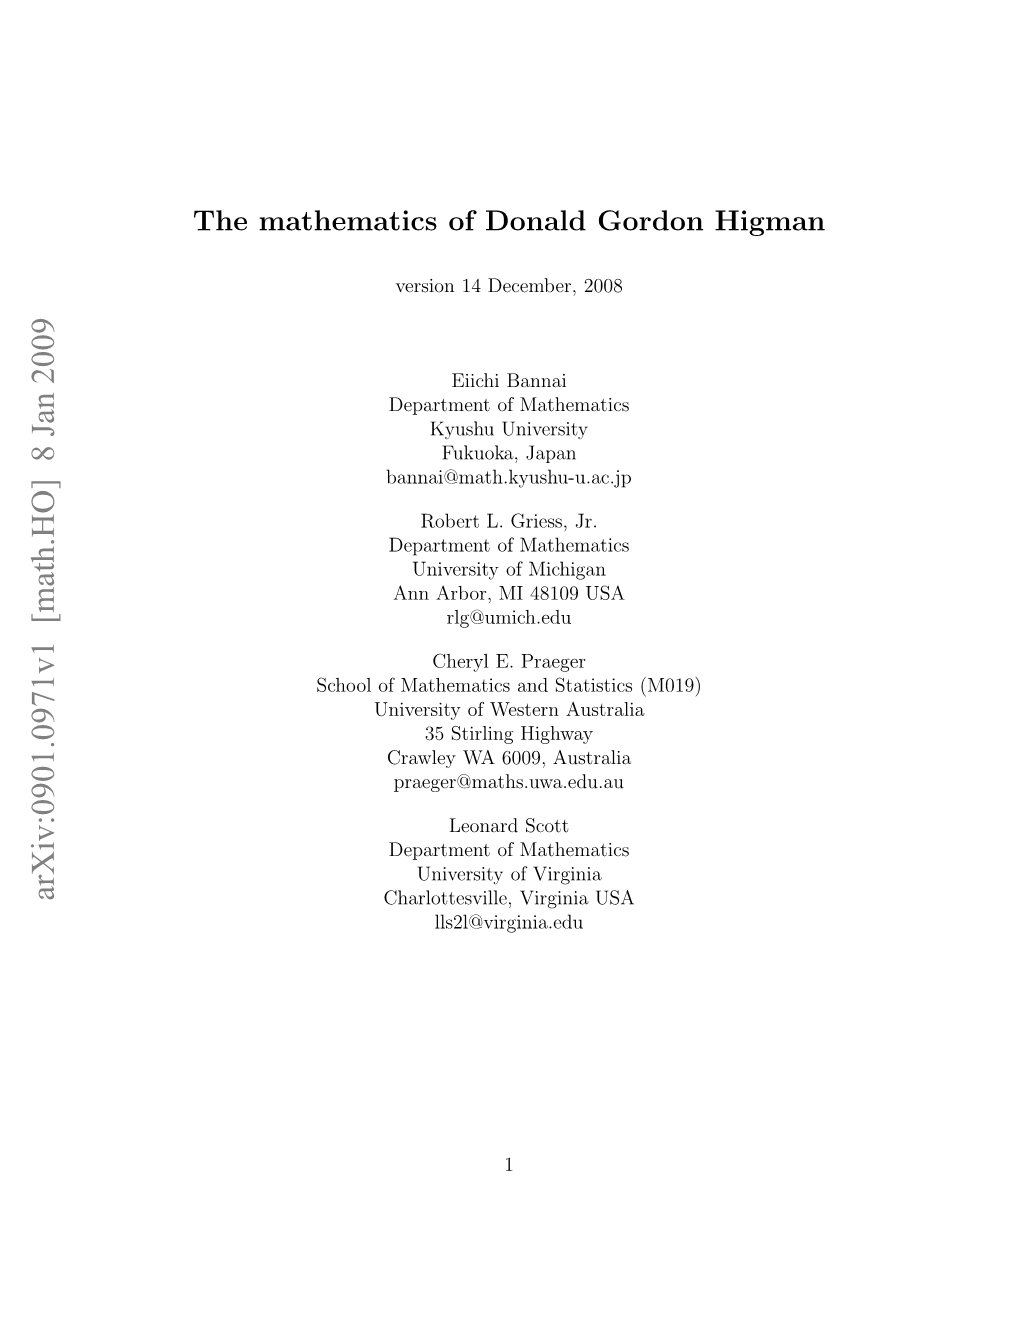 The Mathematics of Donald Gordon Higman